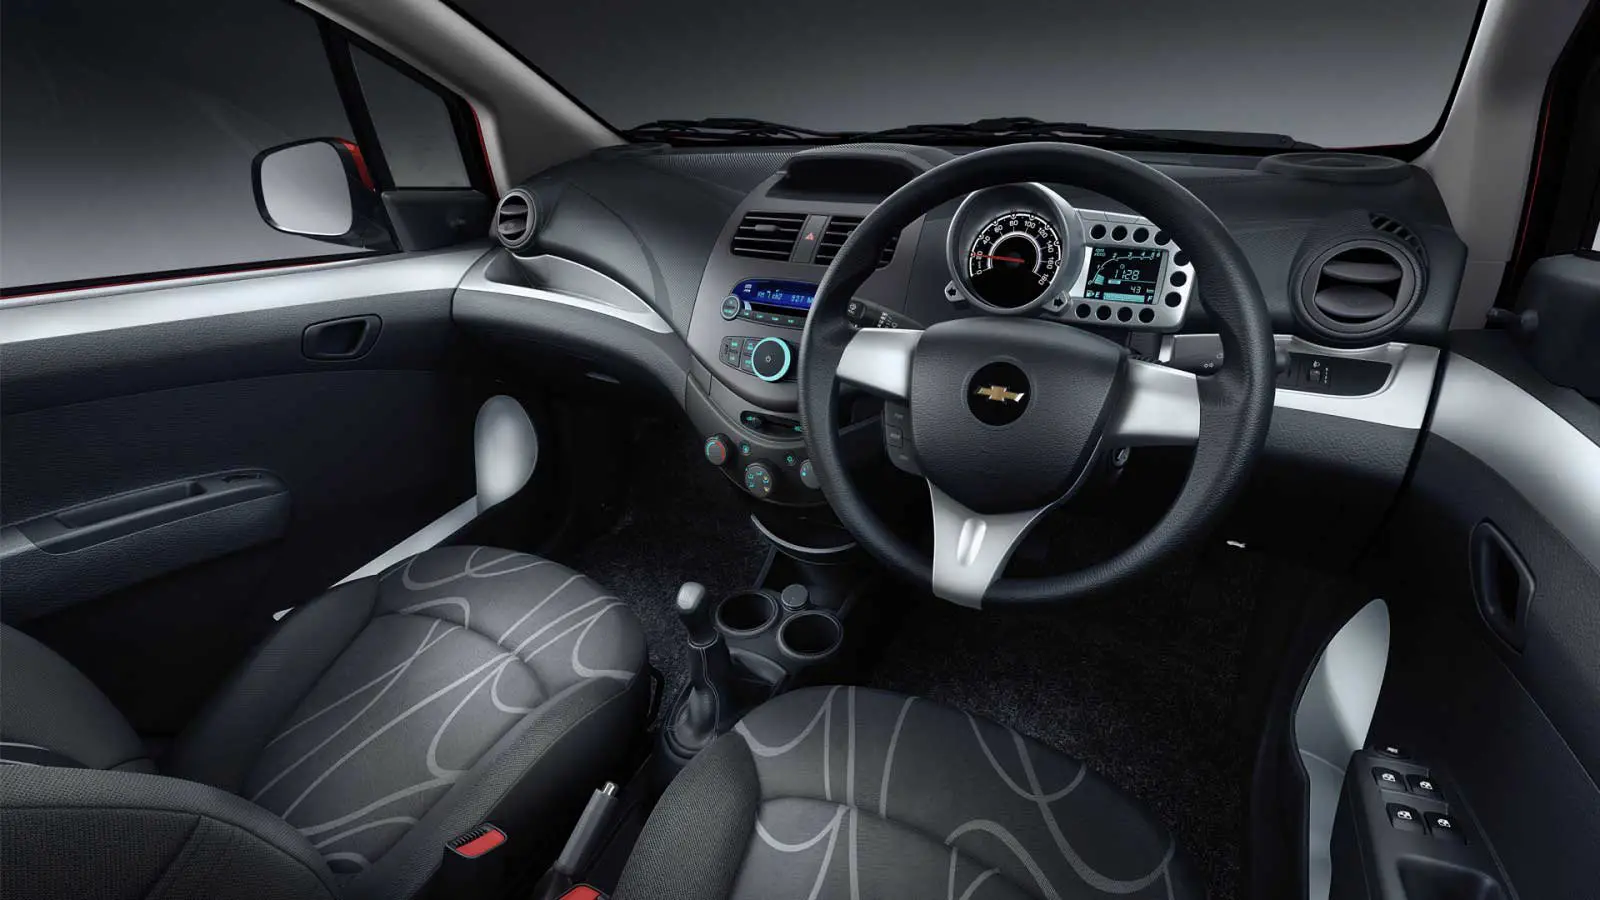 Chevrolet Beat LT Option Petrol Interior front view